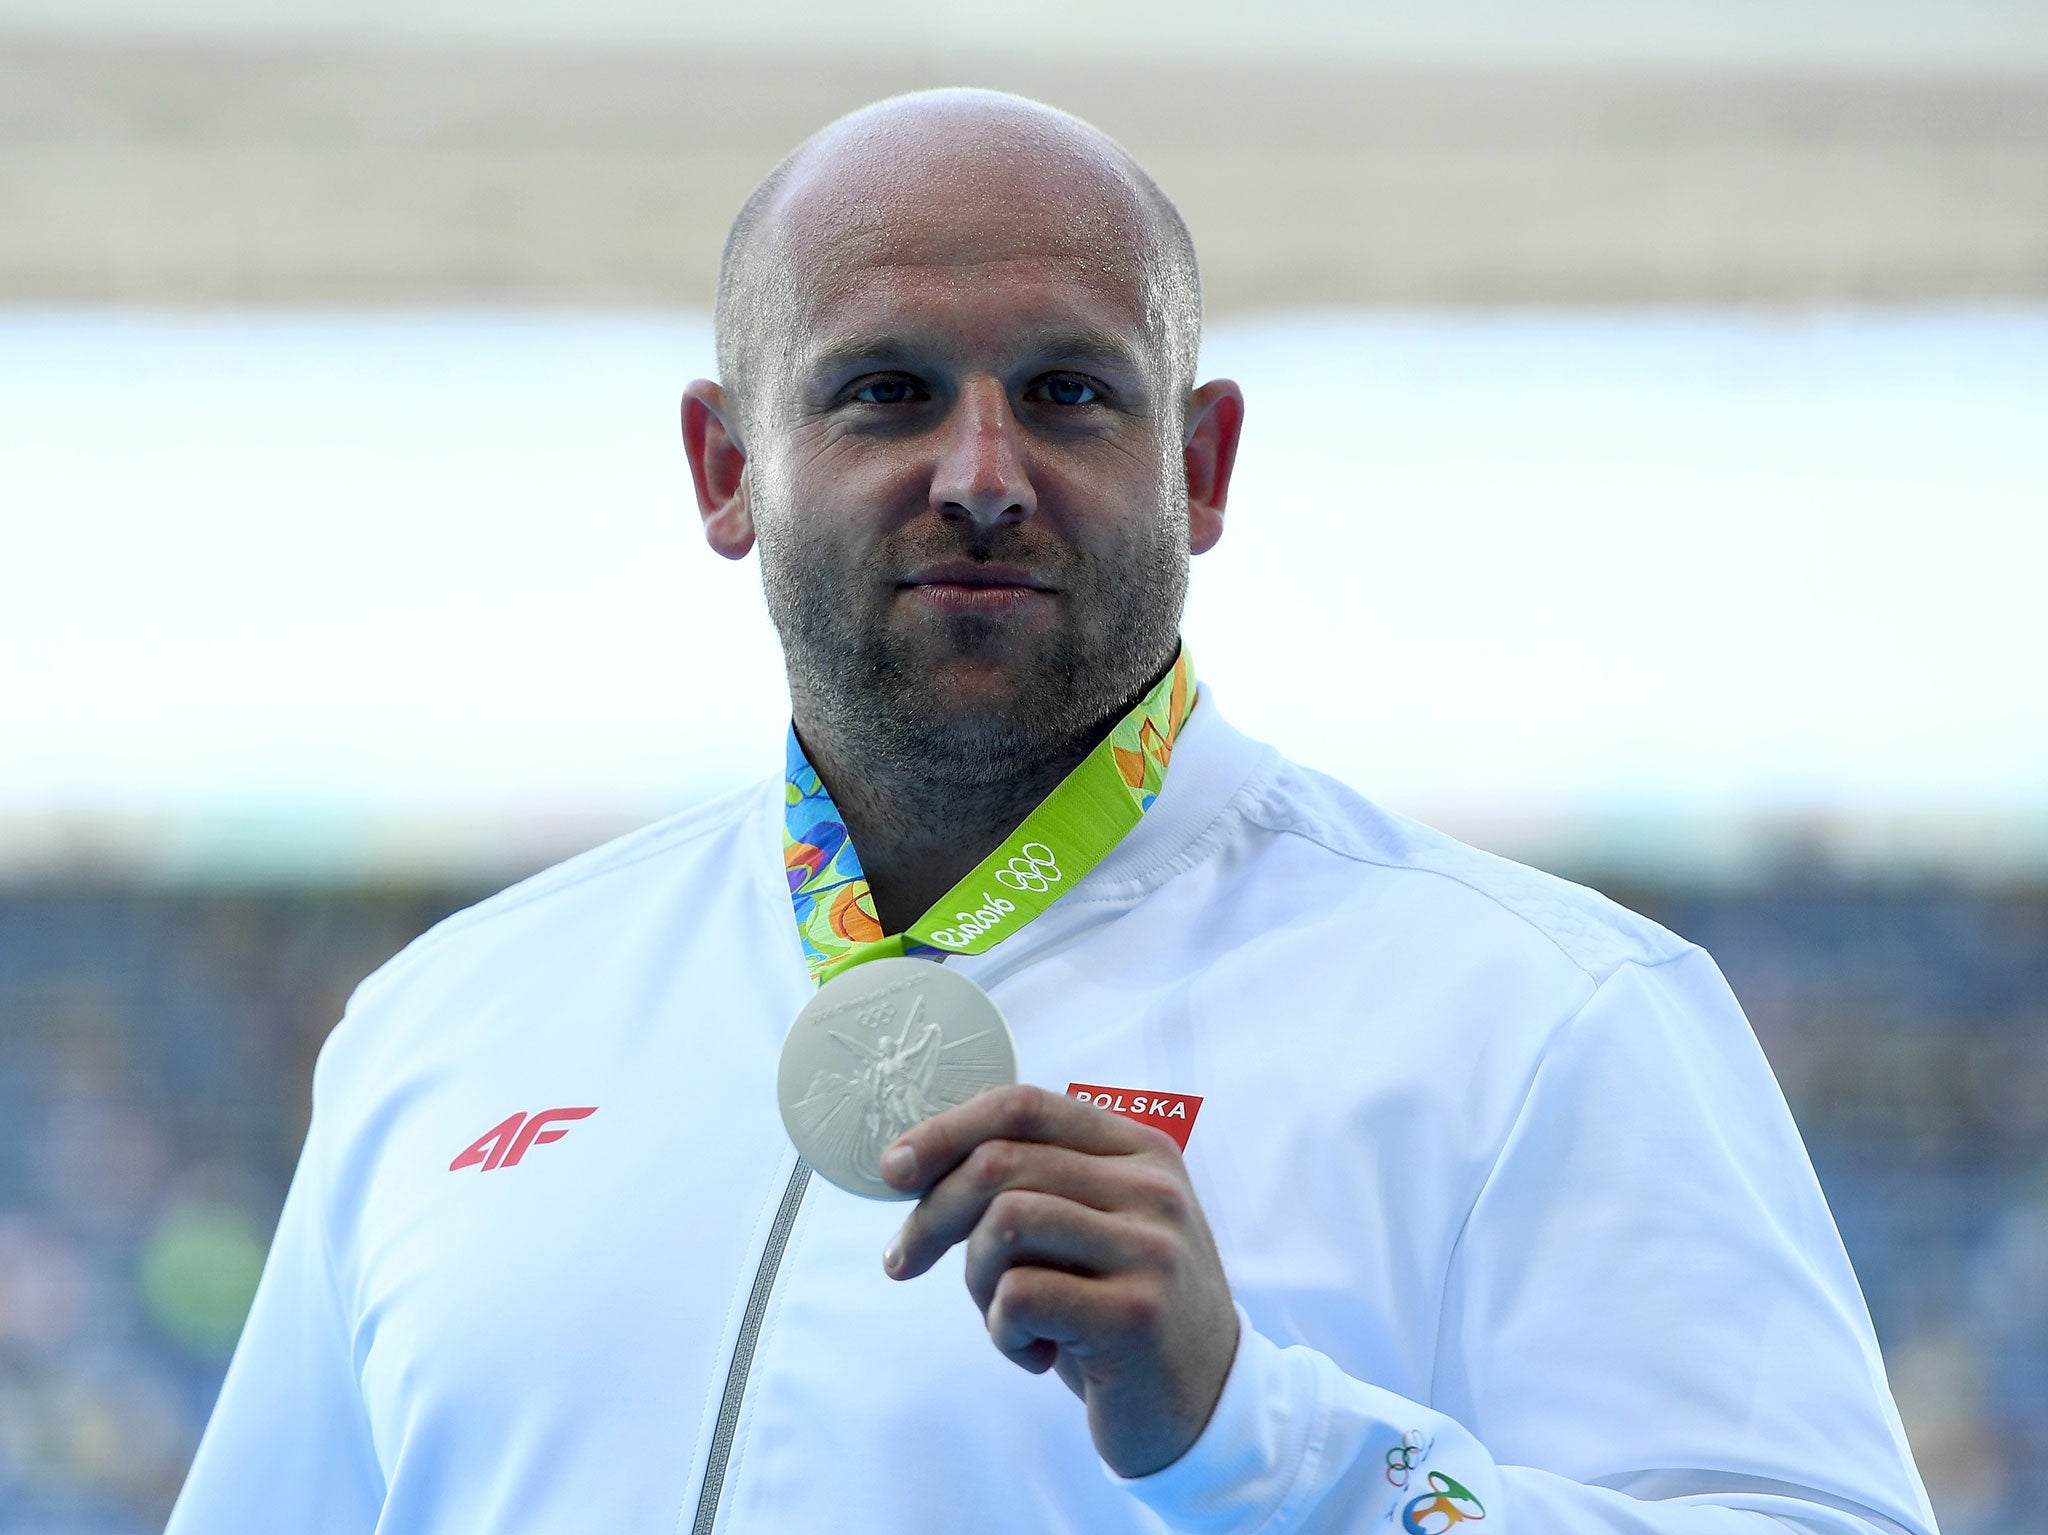 Piotr Malachowski with his silver medal